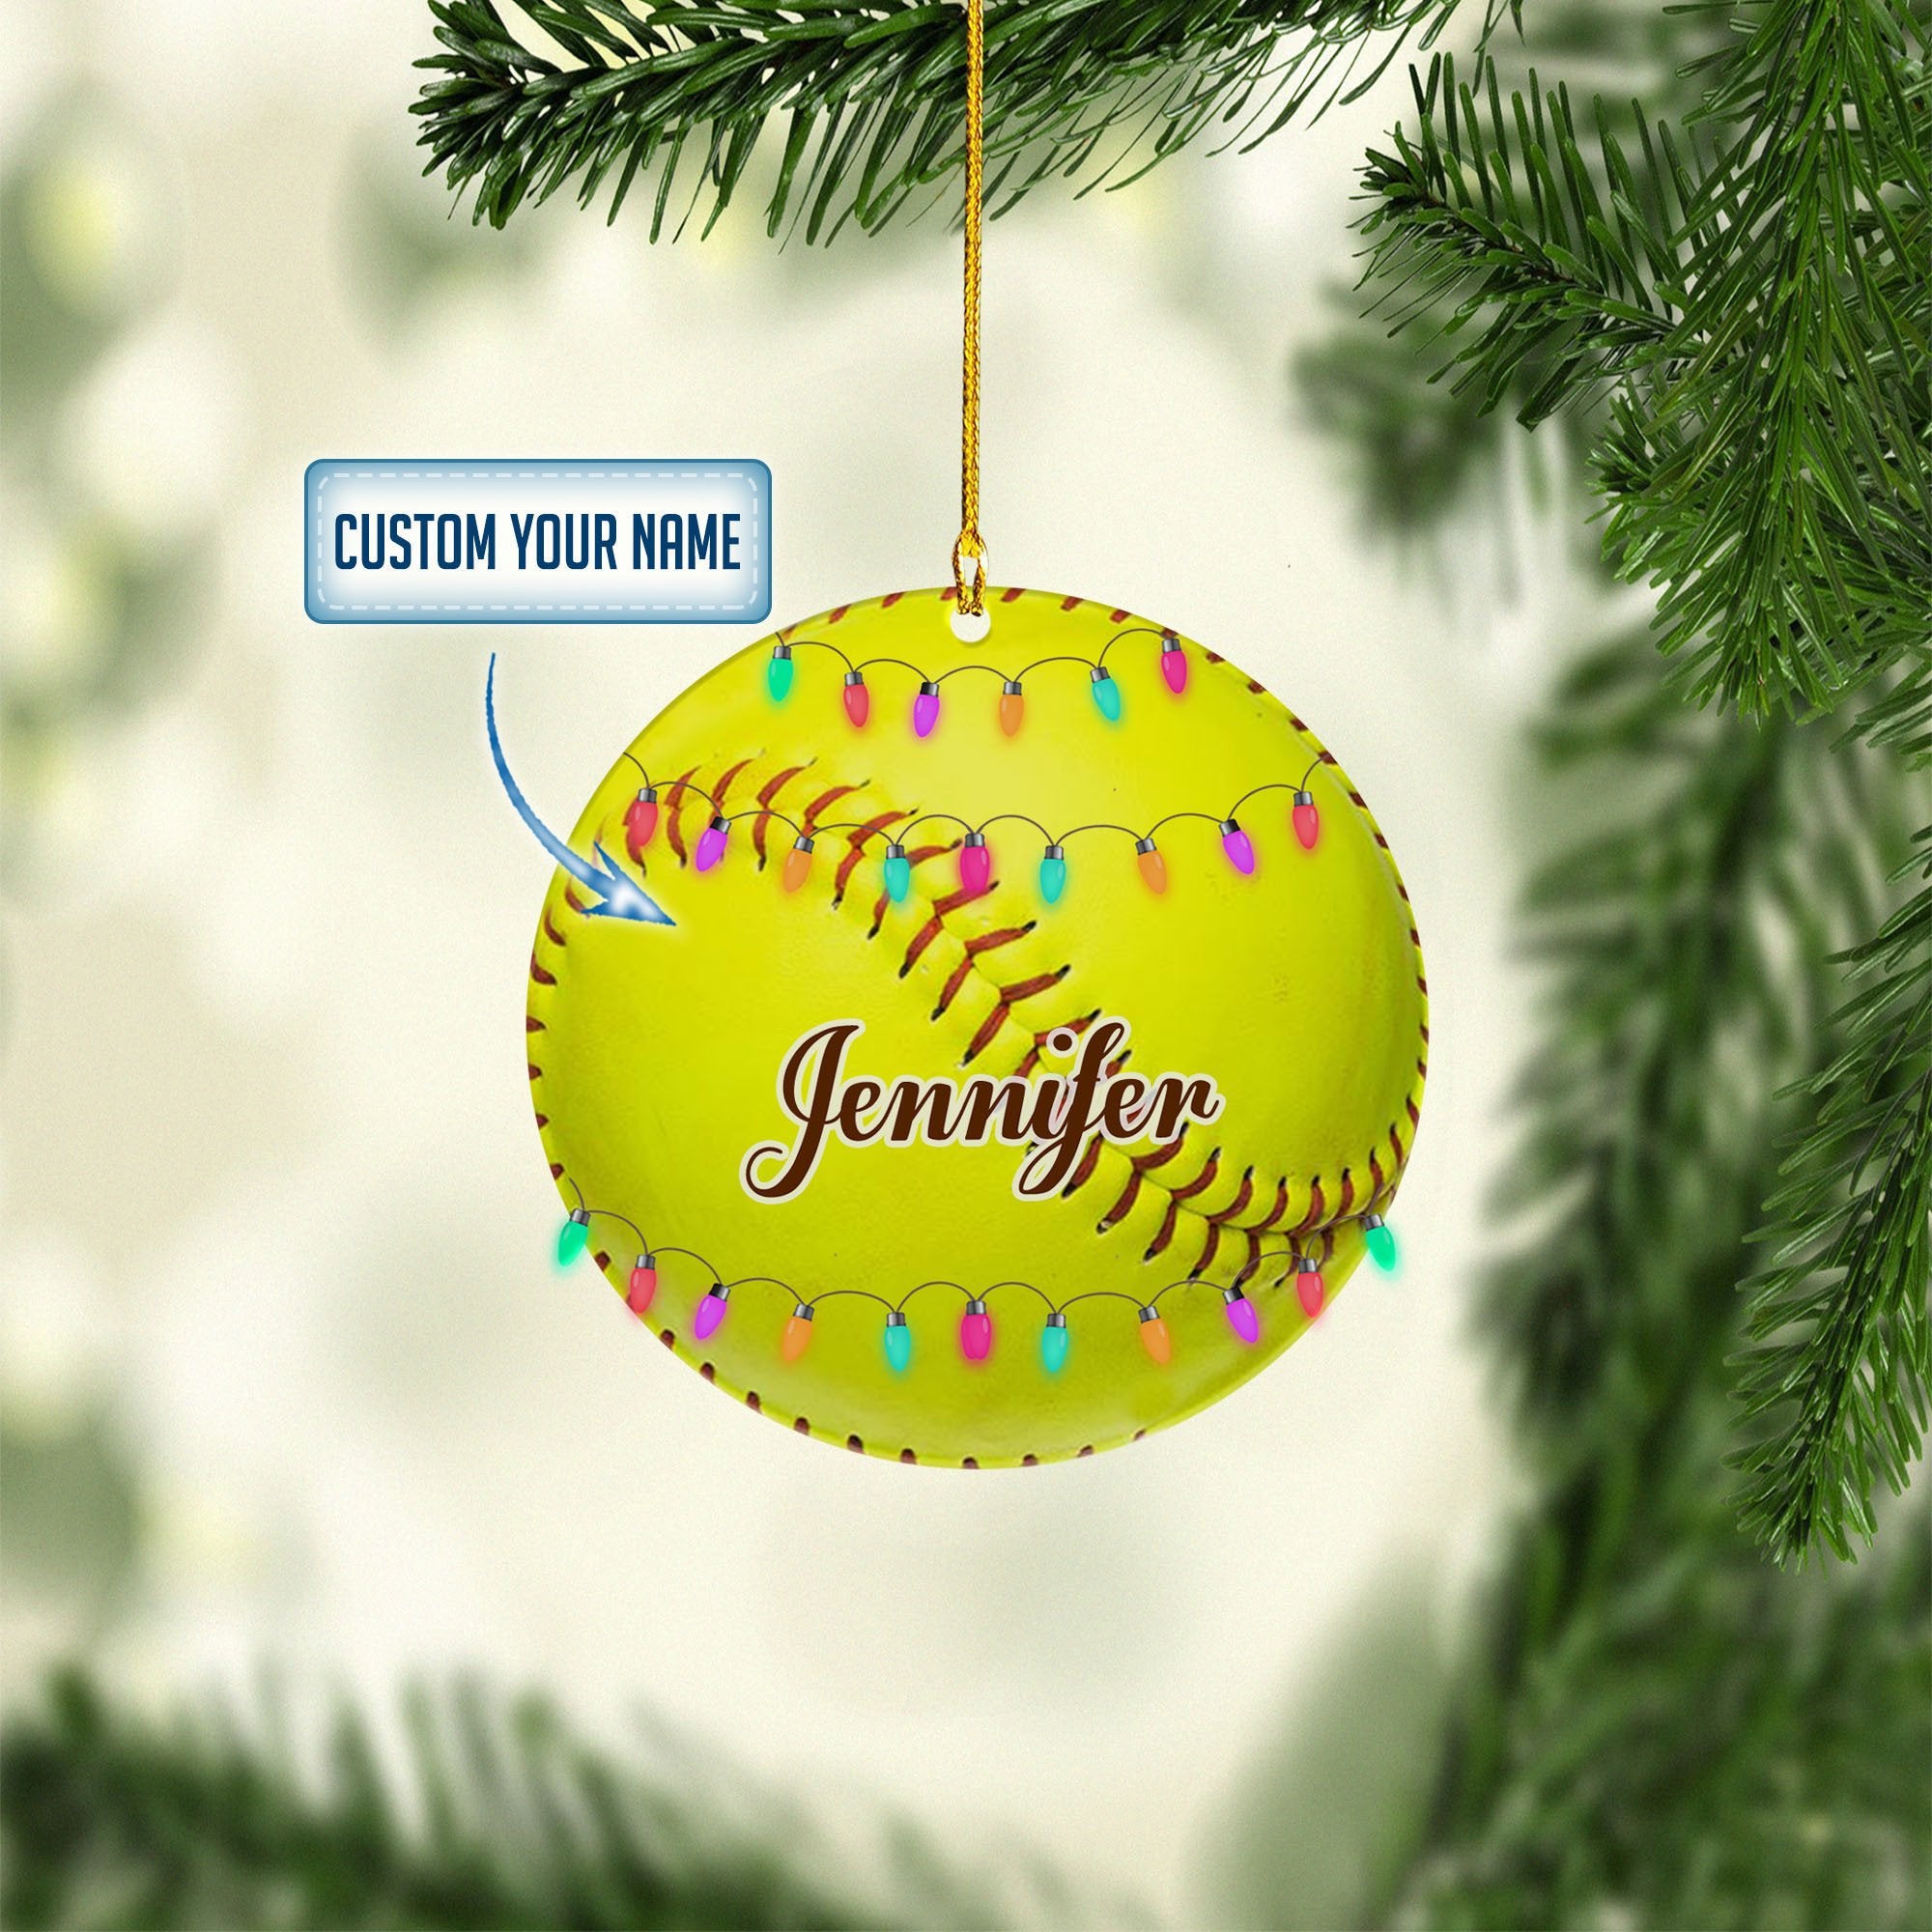 Personalized Name Number Softball Ball Christmas Ornaments/ Gift for Softball Player